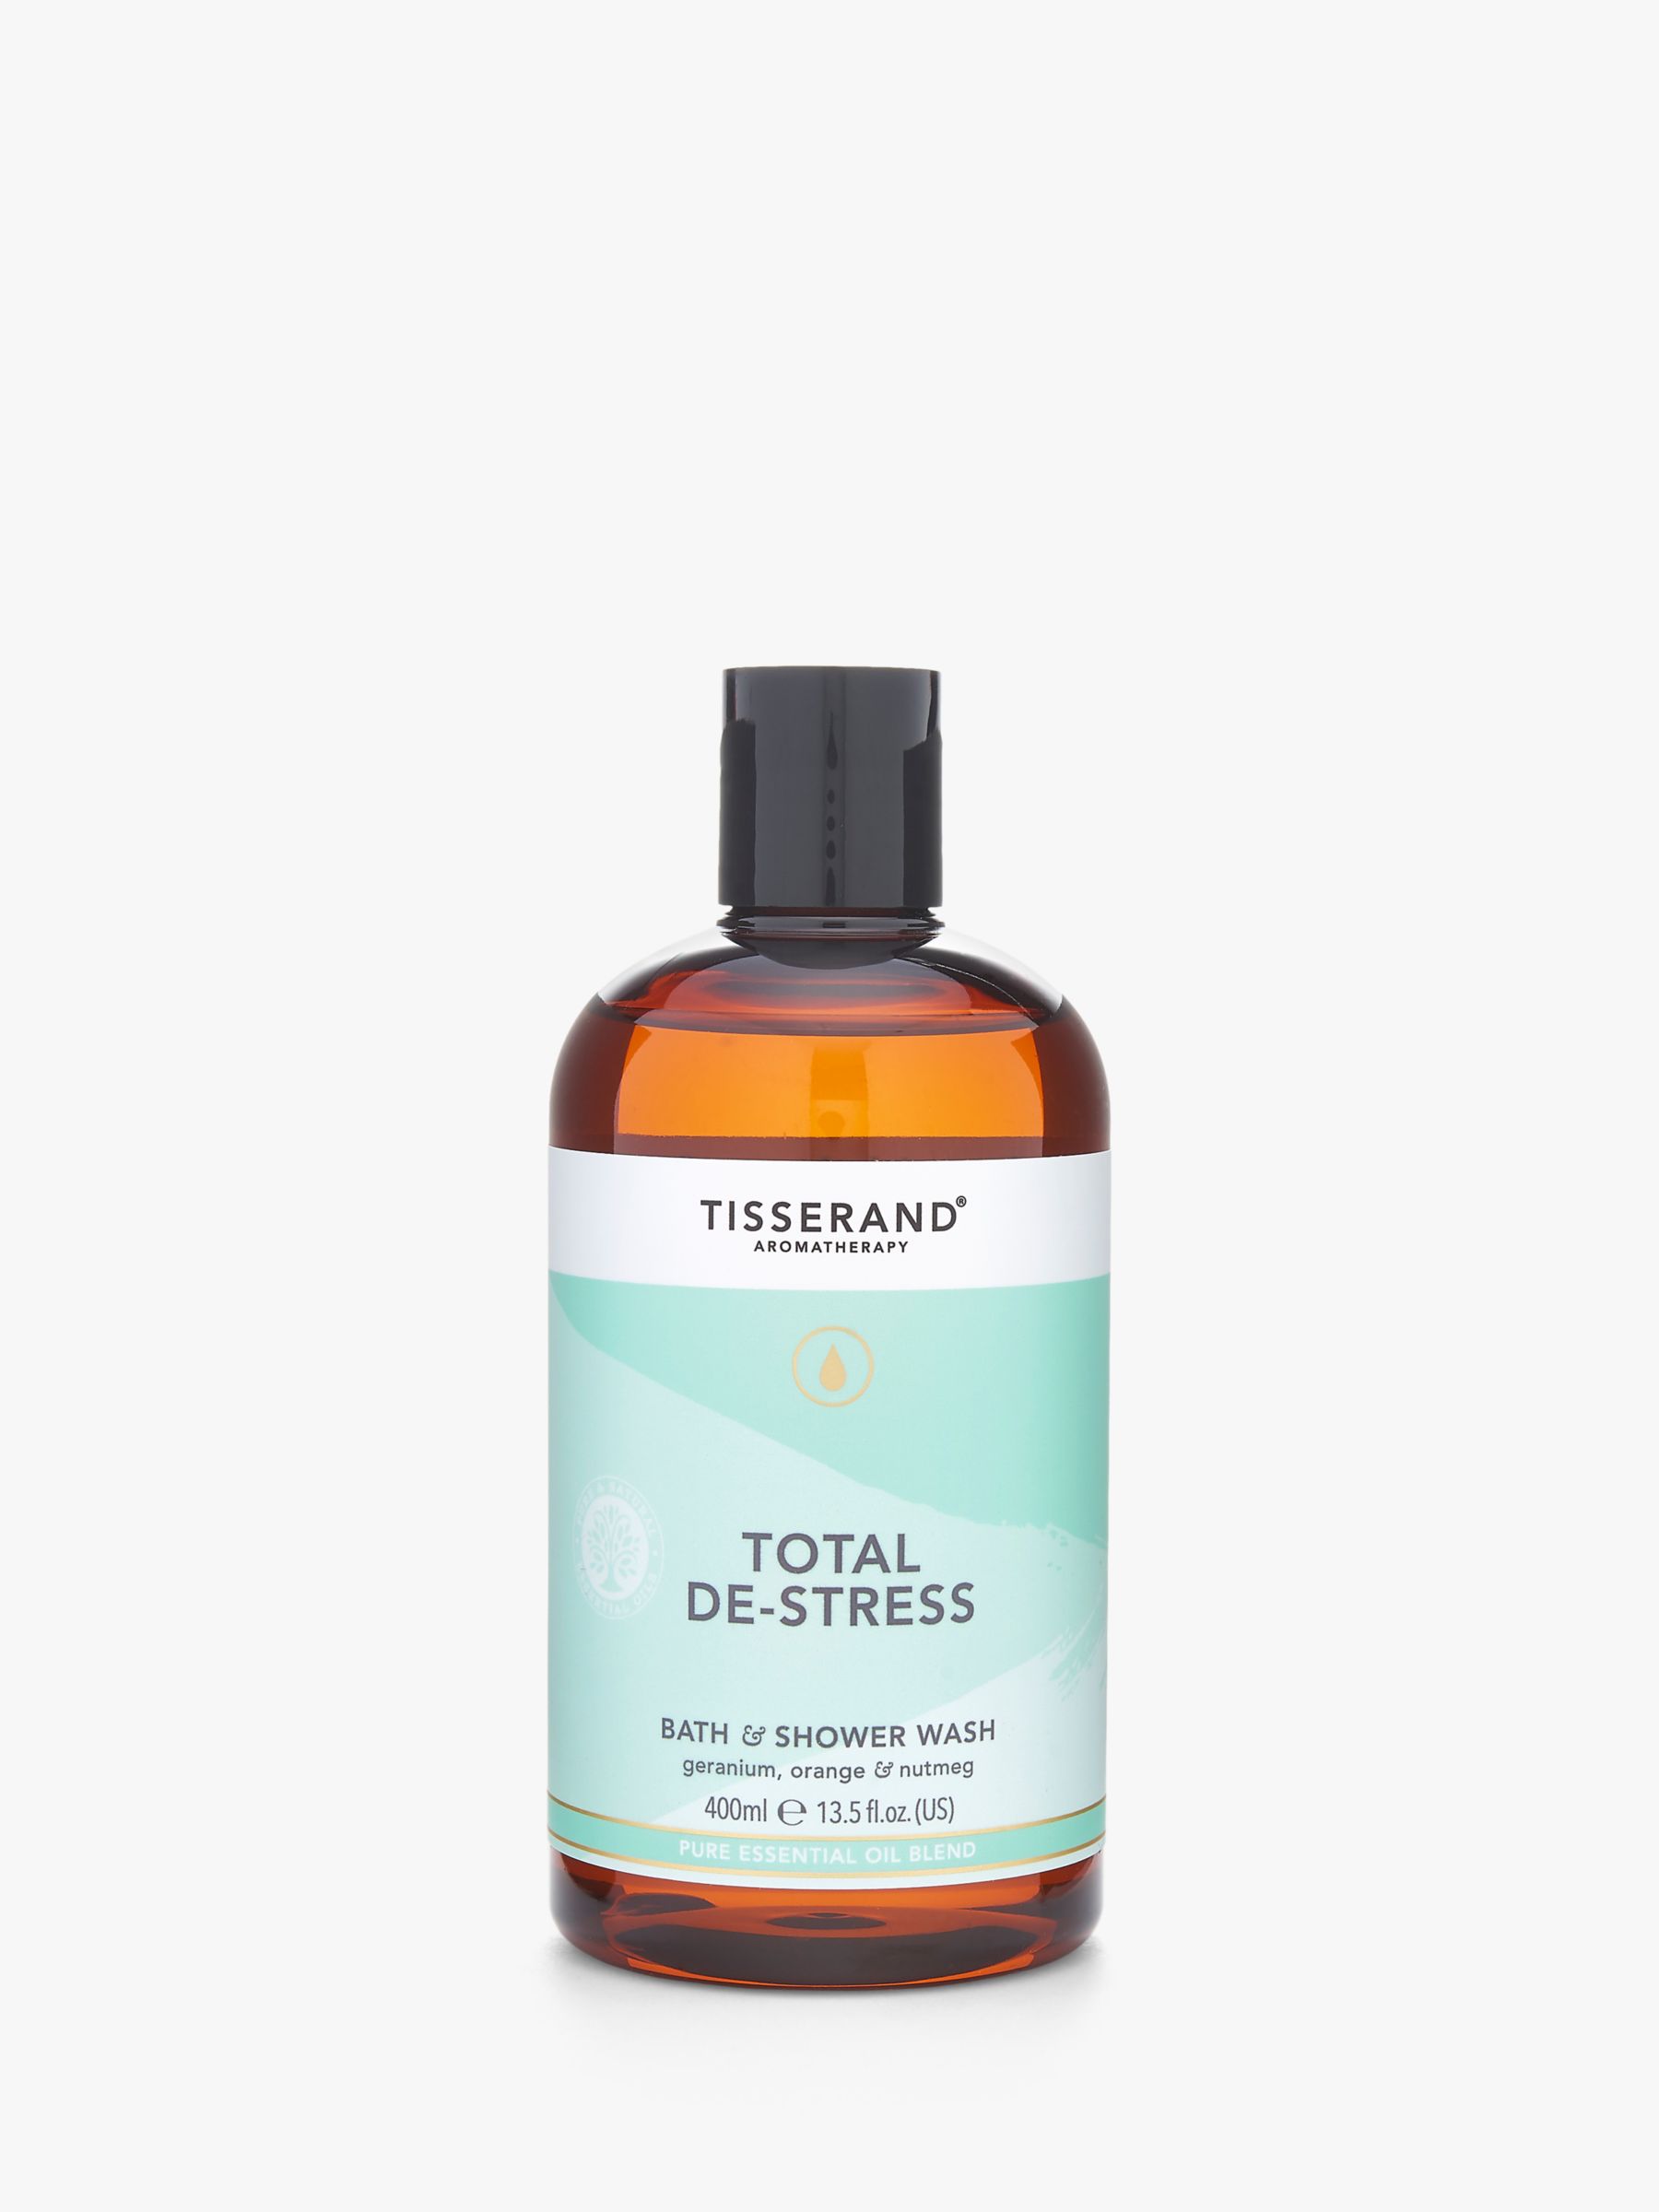 Tisserand Aromatherapy Total De-Stress Bath & Shower Wash, 400ml 2